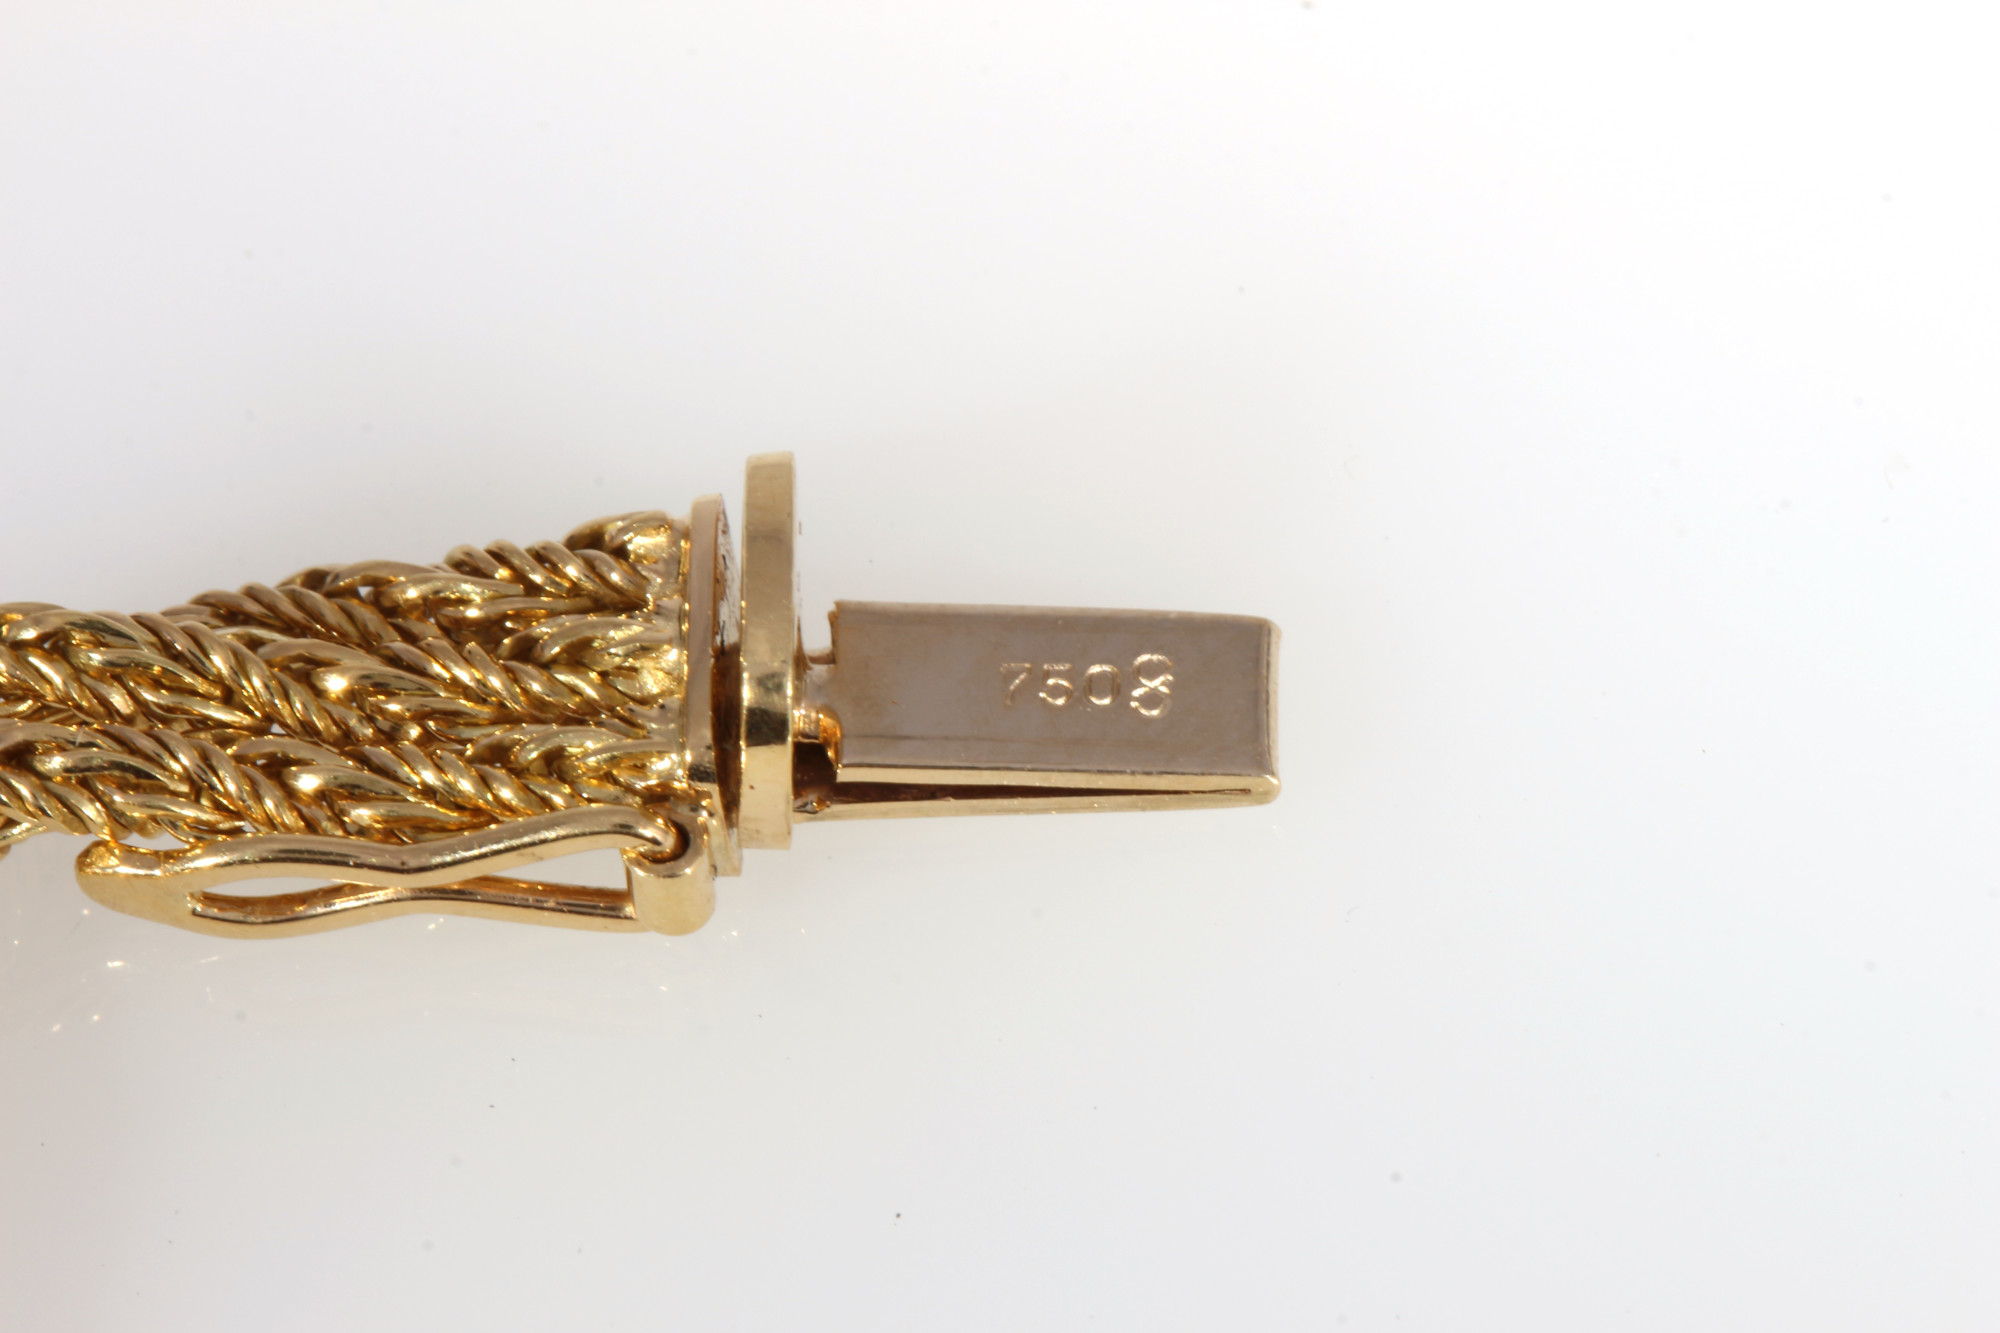 750 gold / 950 platinum diamond necklace and bracelet, cord, 18K Gold / 950 Platin Brillanten Coll - Image 5 of 5